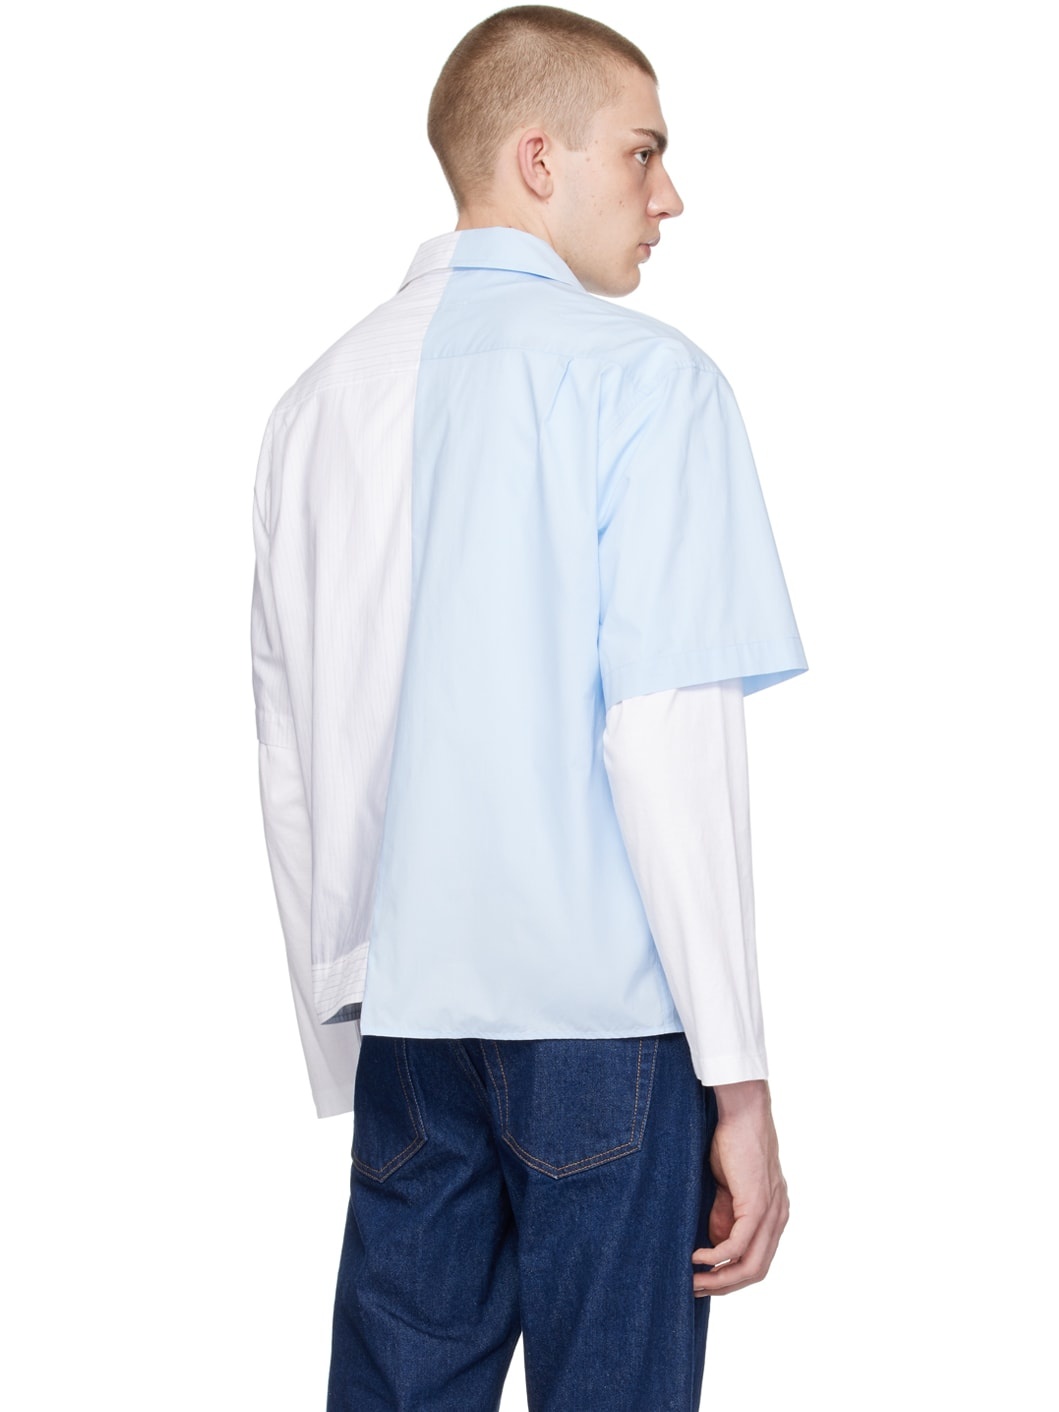 Blue & White Printed Shirt - 3